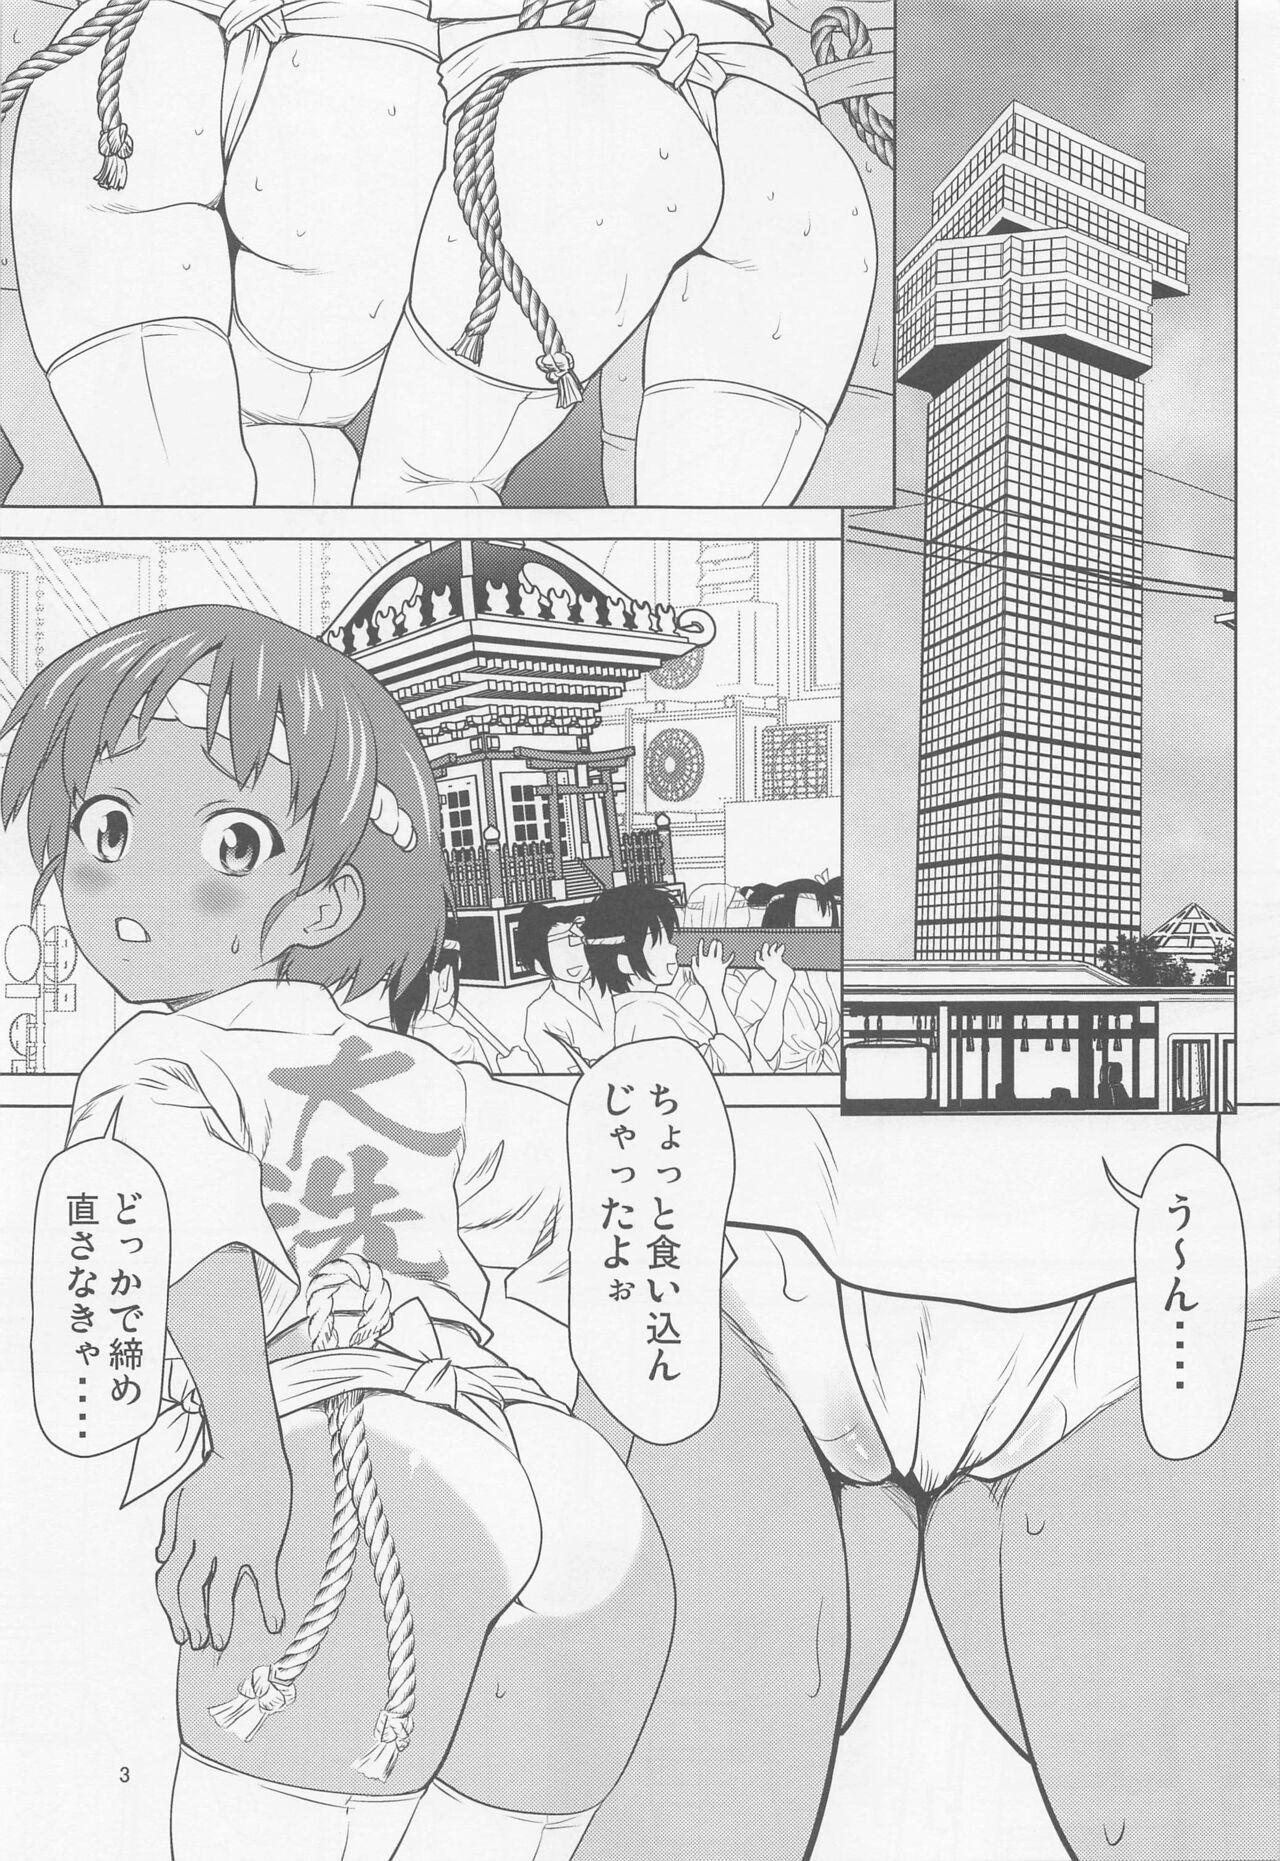 Studs hiyakefundoshinokarinachantomonokagede・・・・ Madura - Page 2